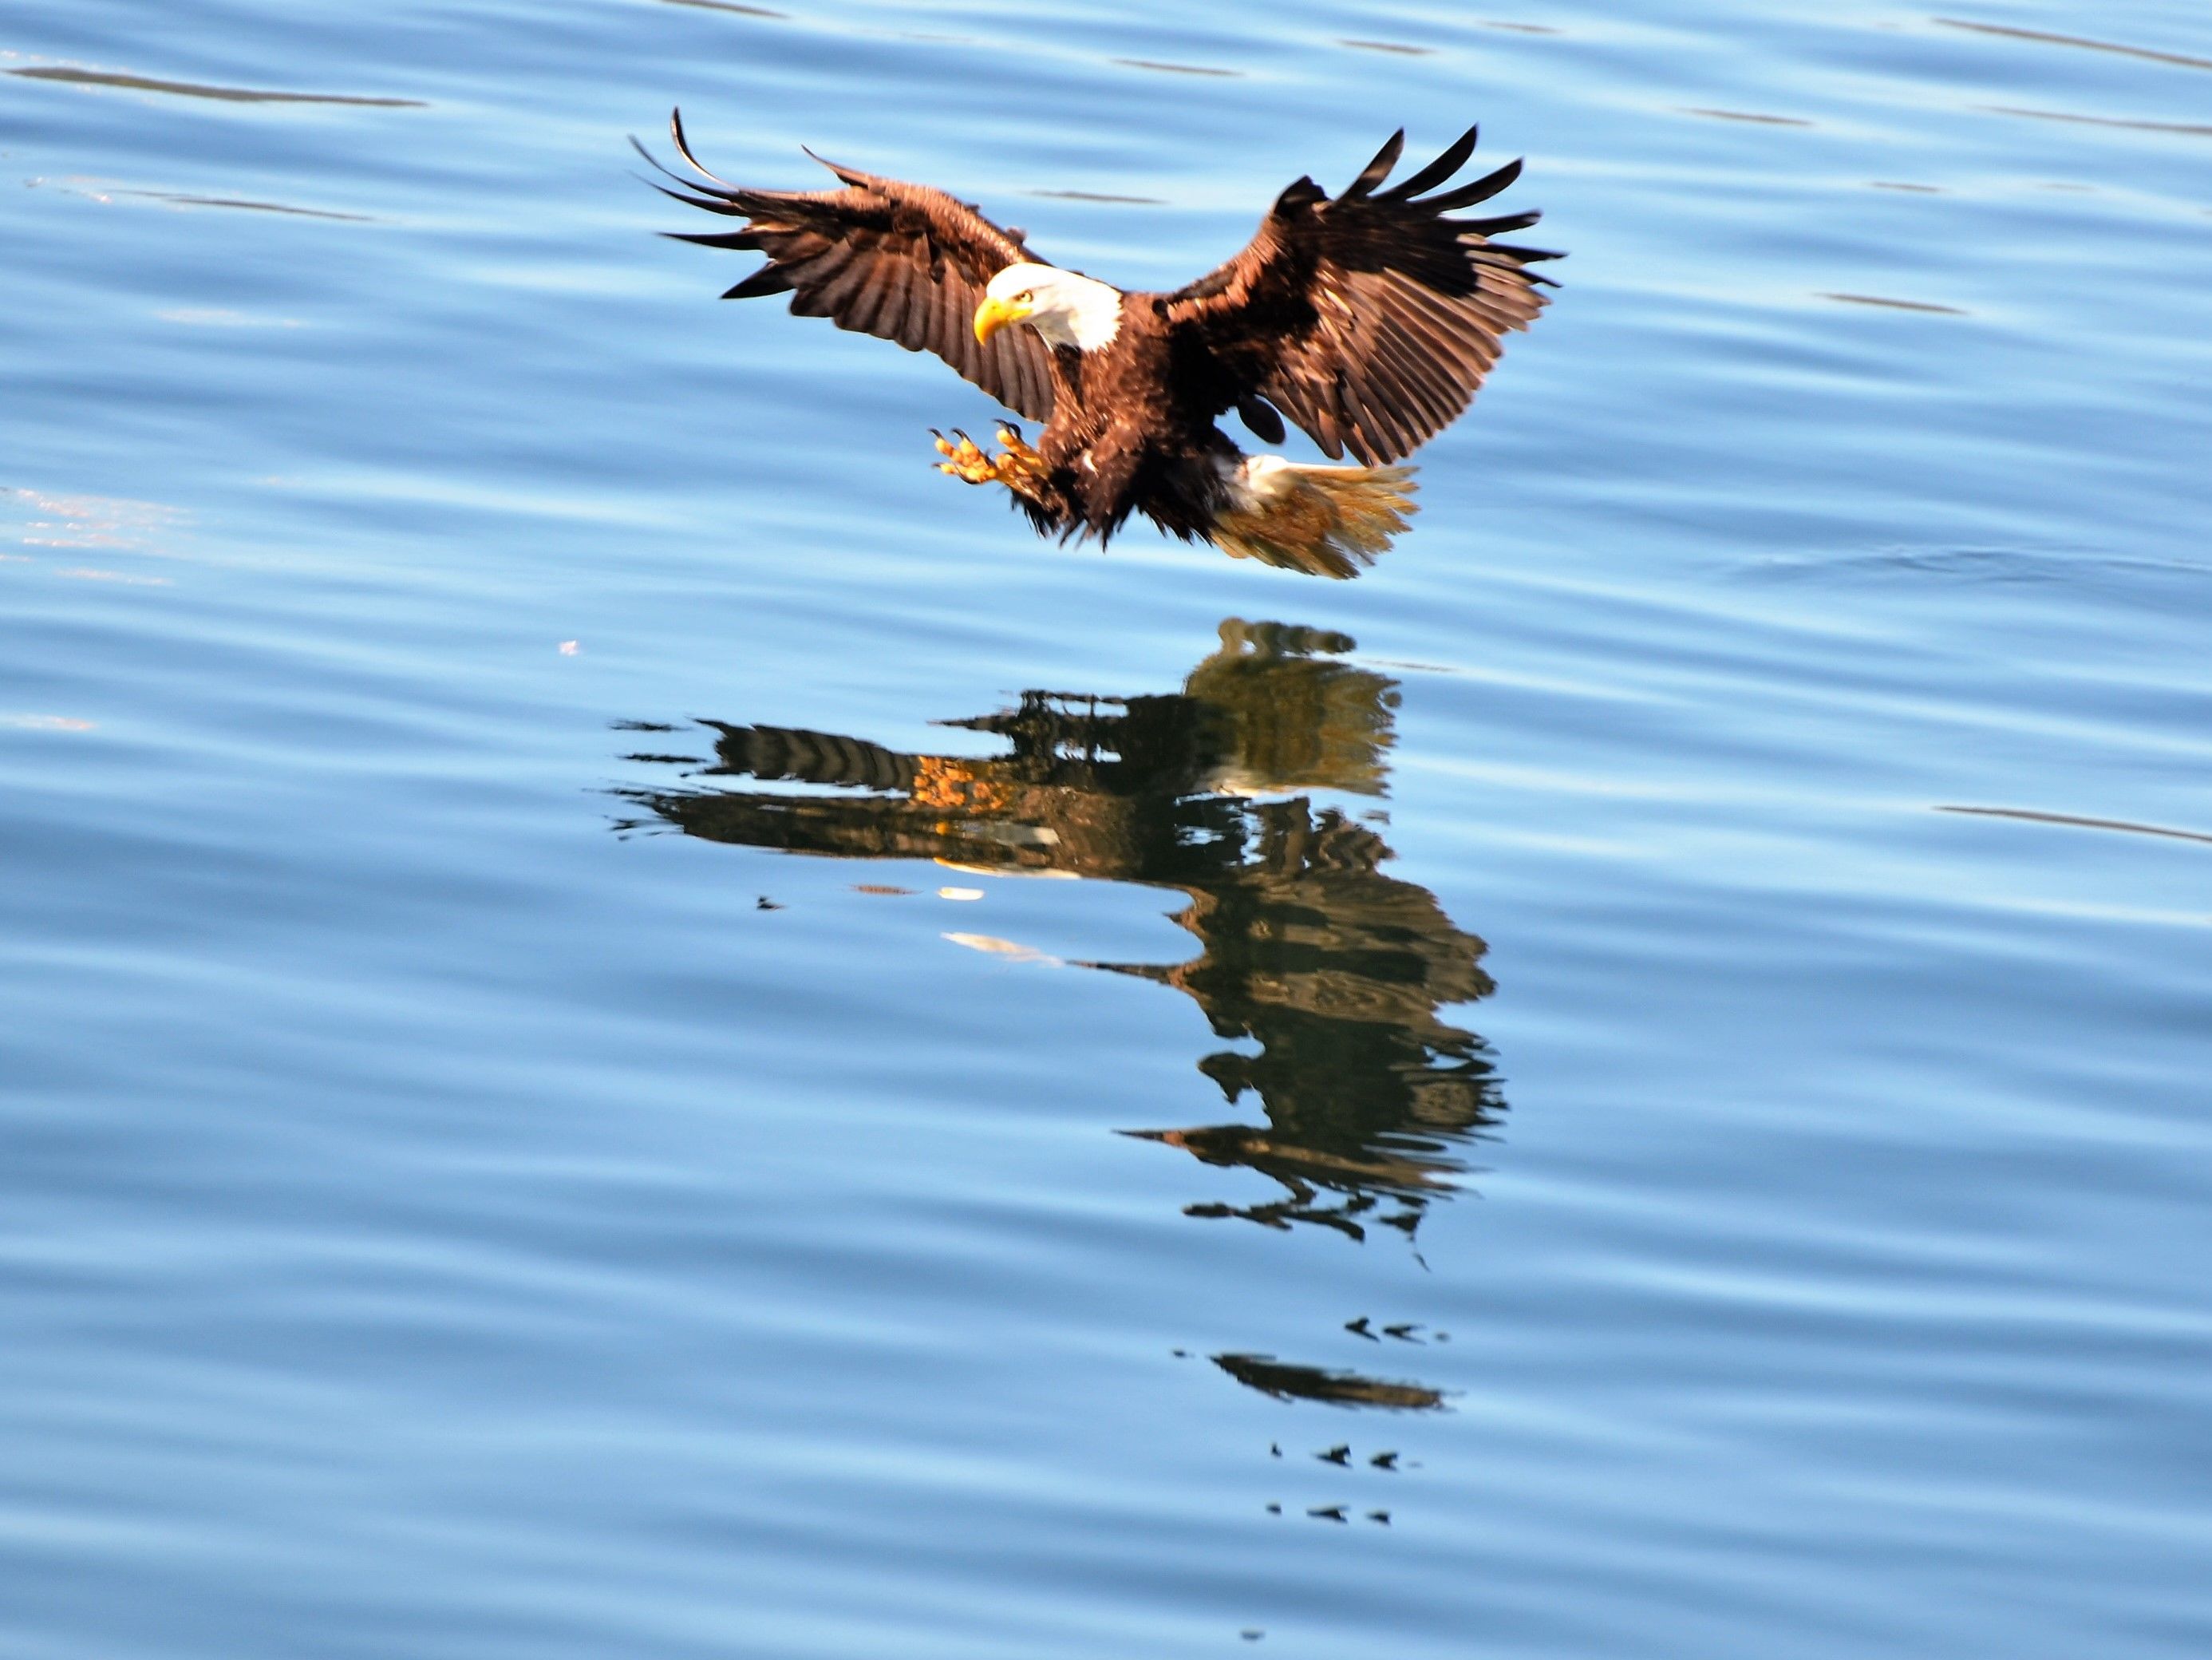 Aigle pêcheur en action (bald eagle)